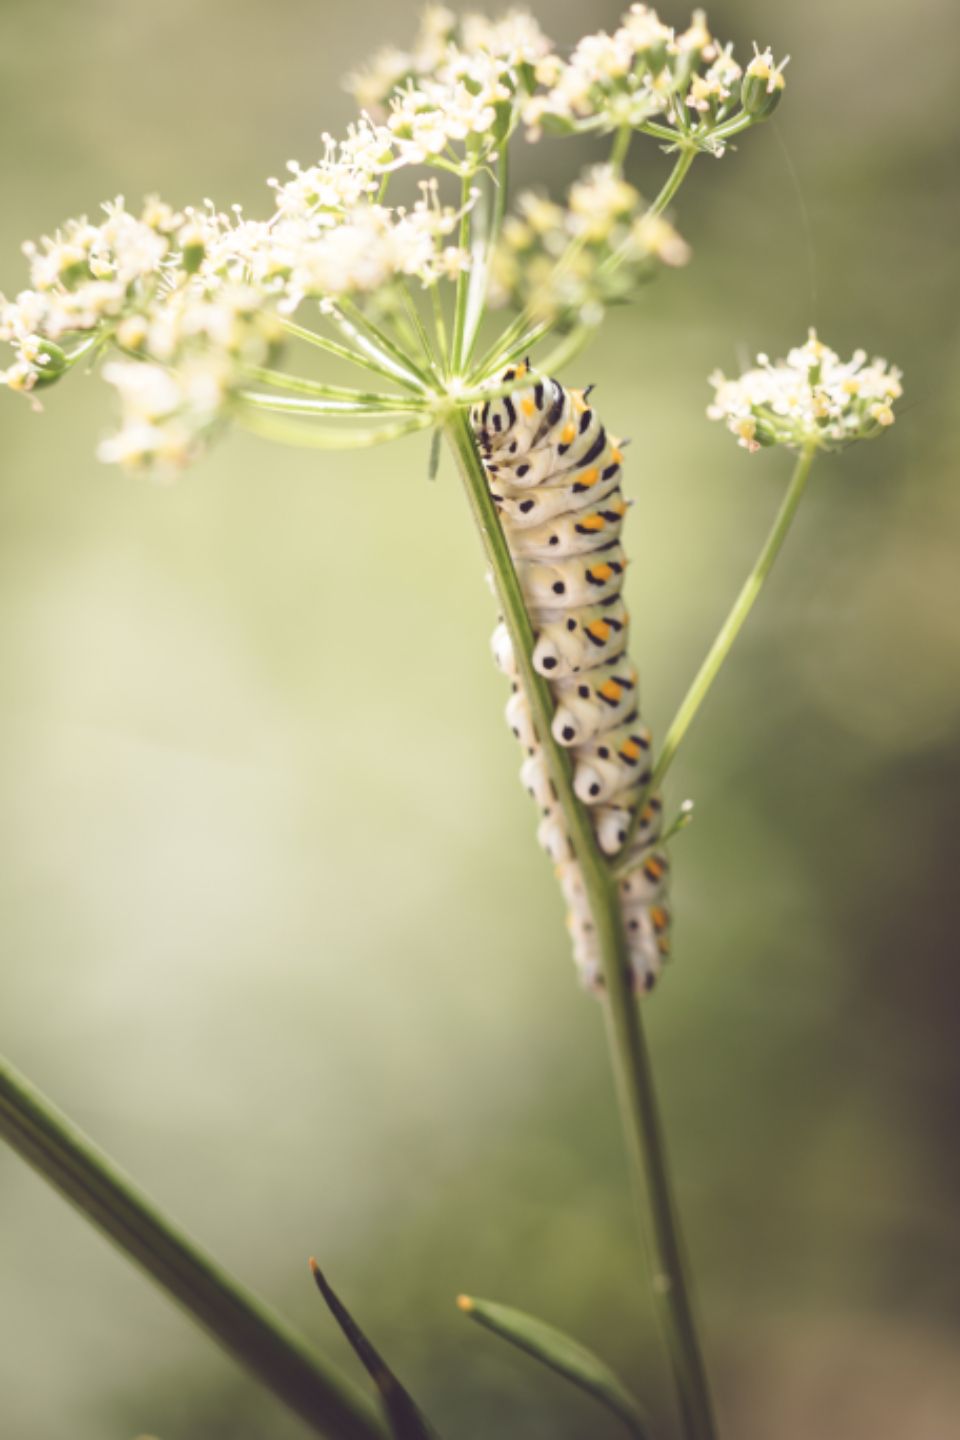 a caterpillar climbs up the stem of a baby's breath flower